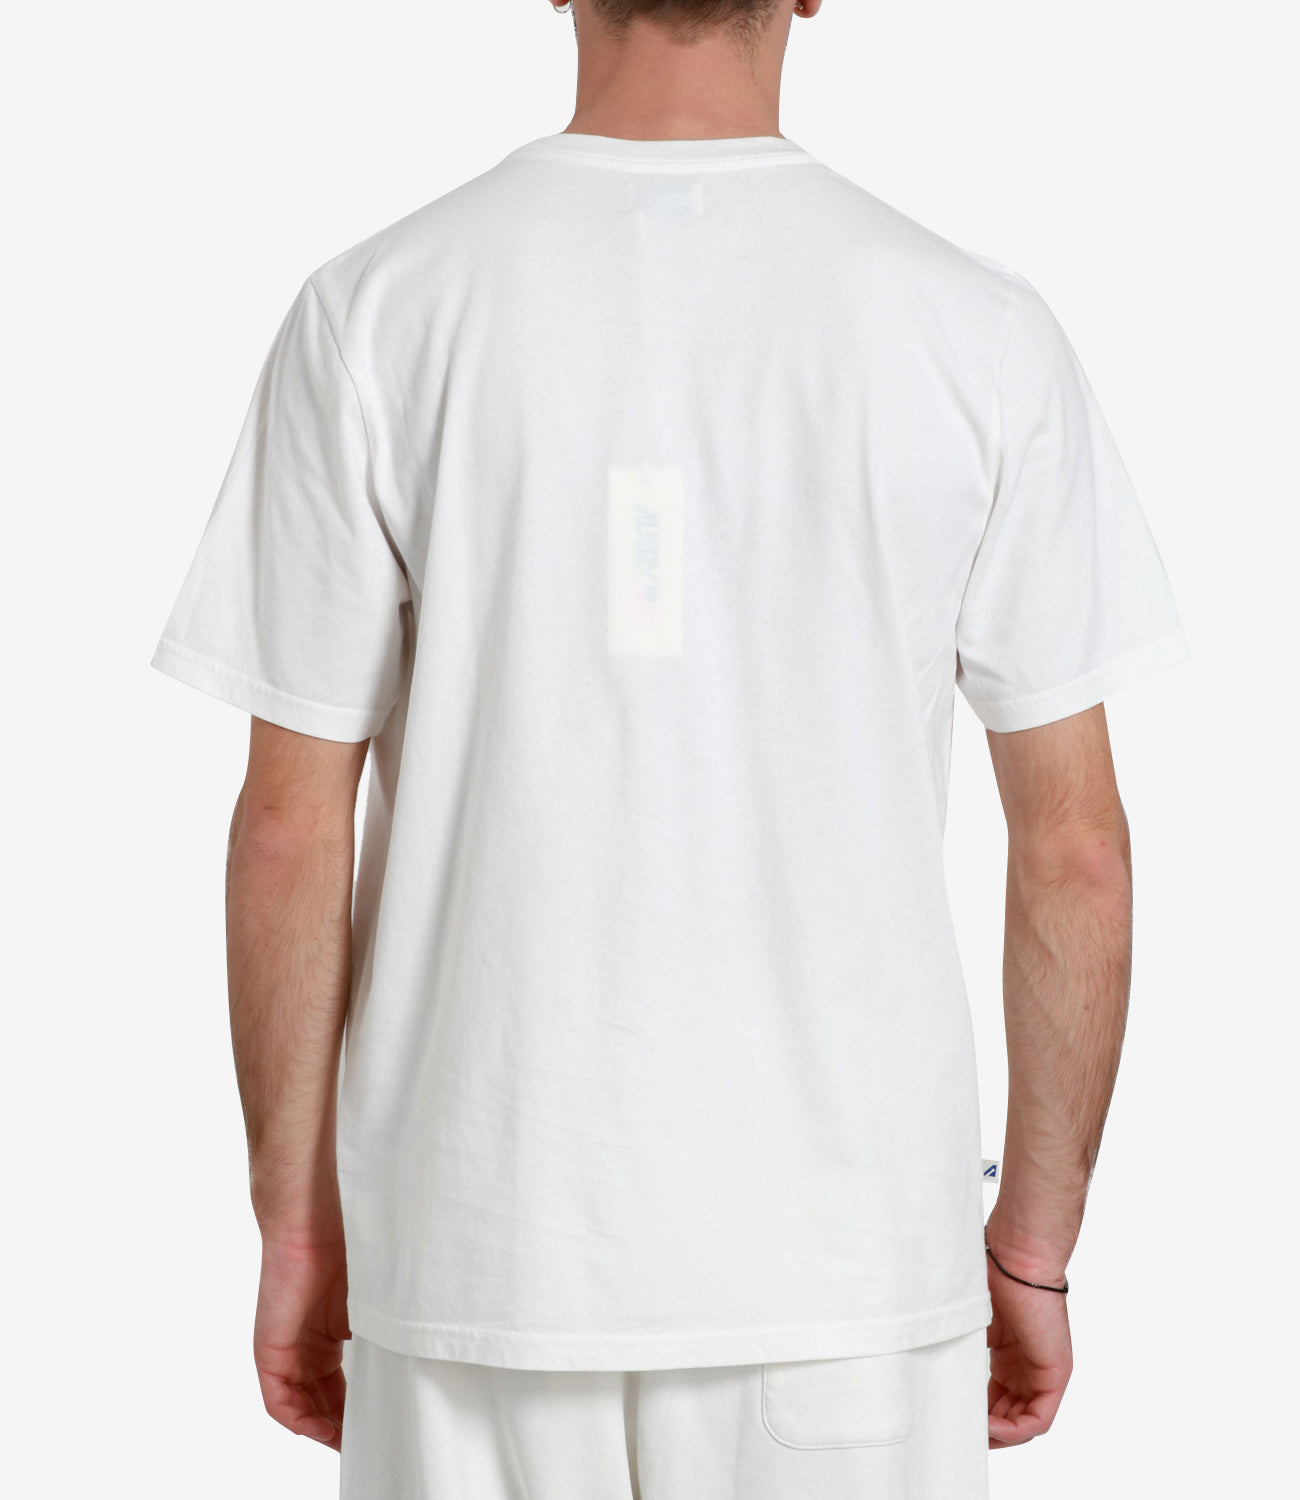 Autry | White T-Shirt